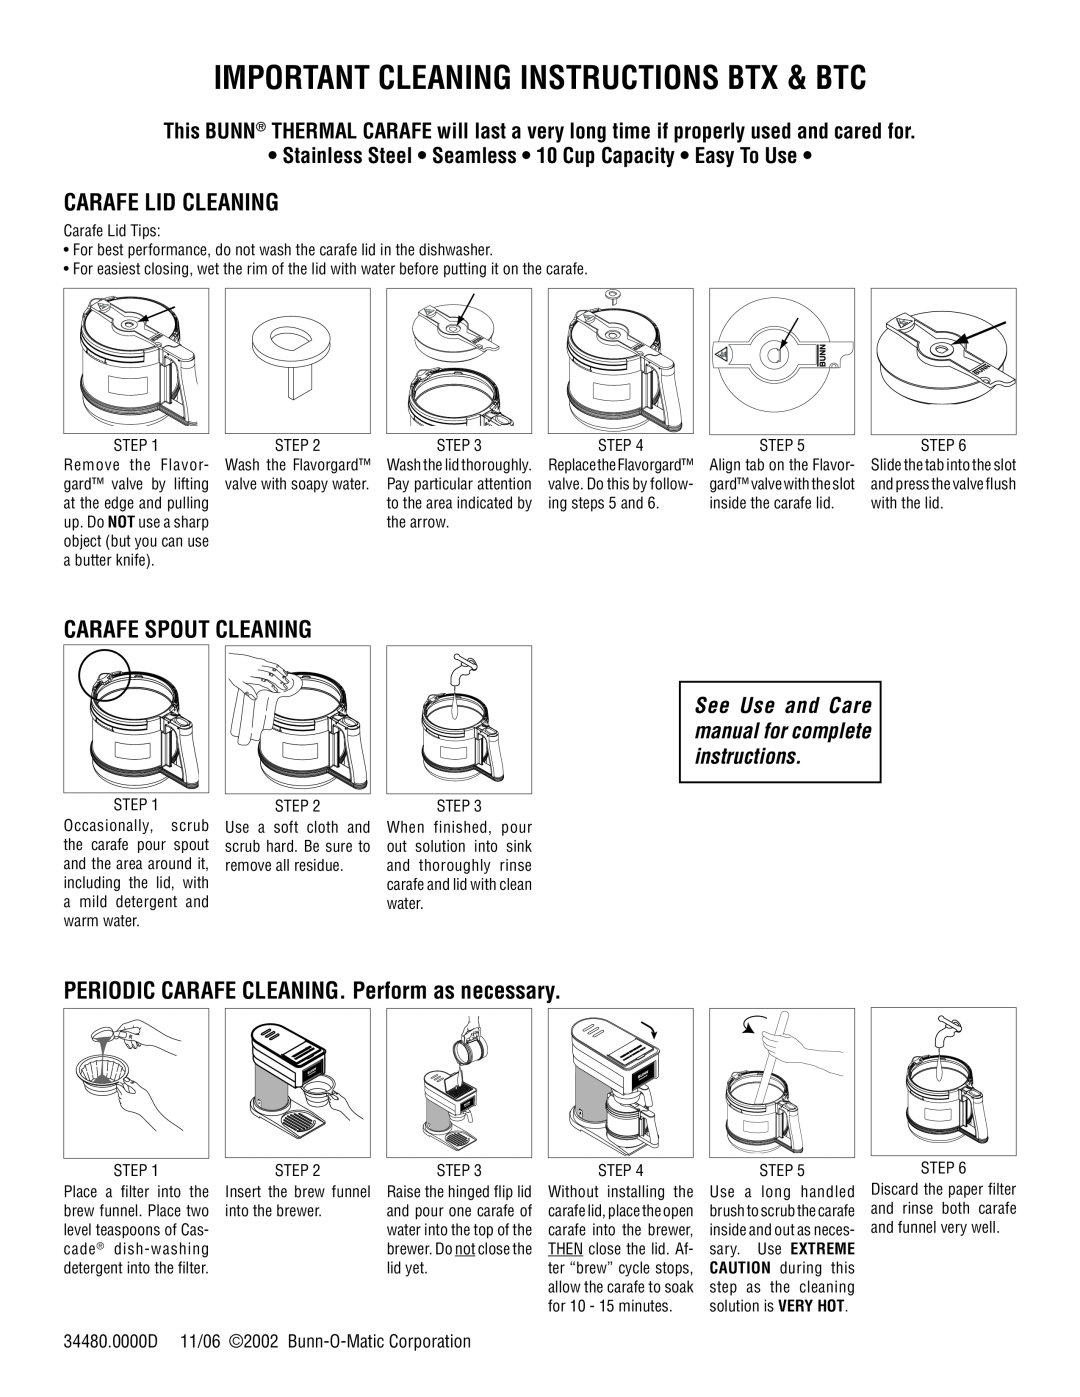 Bunn BTX manual Important Cleaning Instructions Btx & Btc, Carafe Lid Cleaning, Carafe Spout Cleaning 